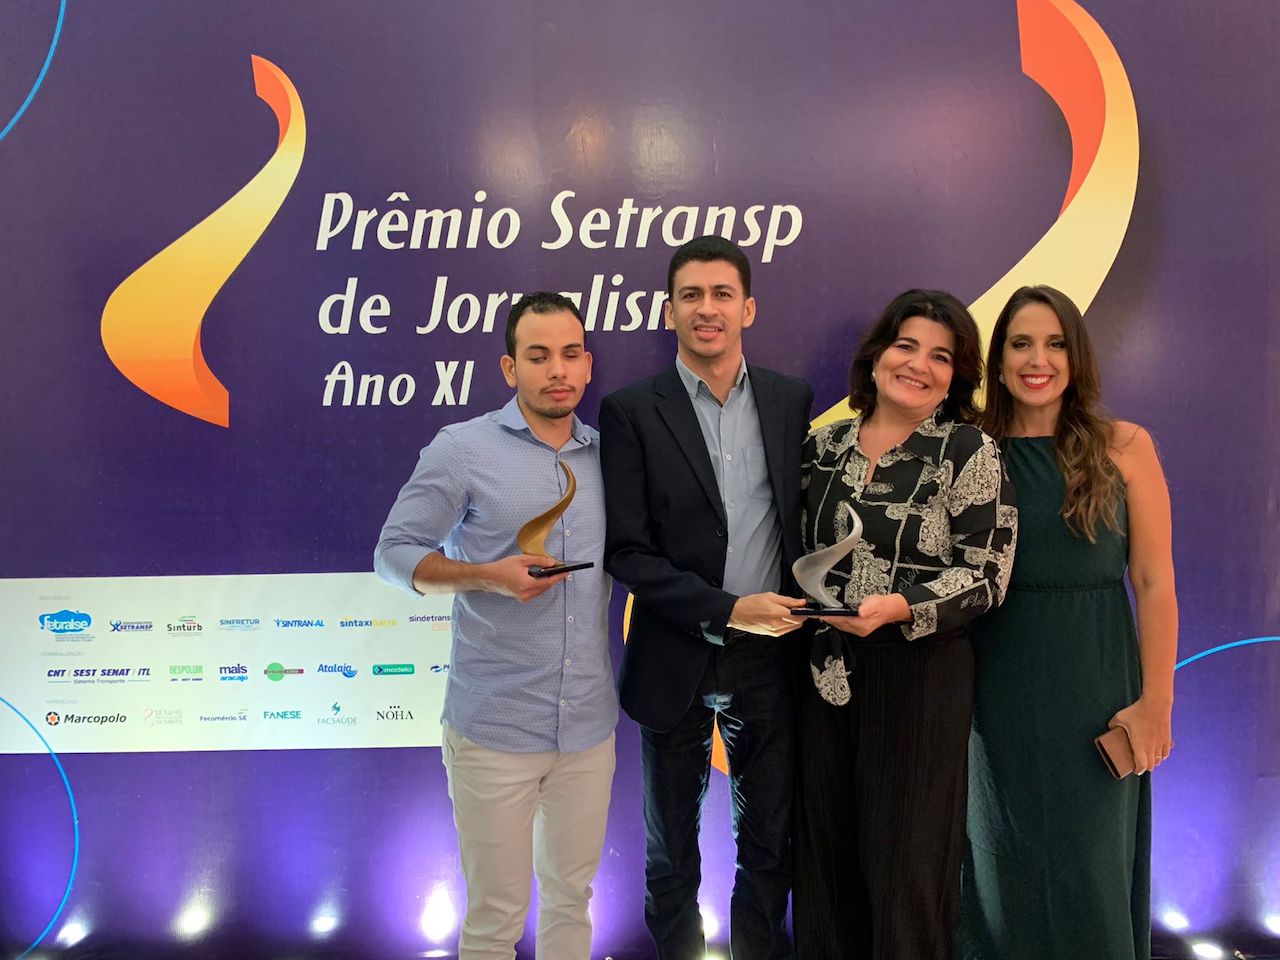 Rádio UFS venceu Prêmio Setransp de Jornalismo pela sexta vez. Fotos: Rádio UFS